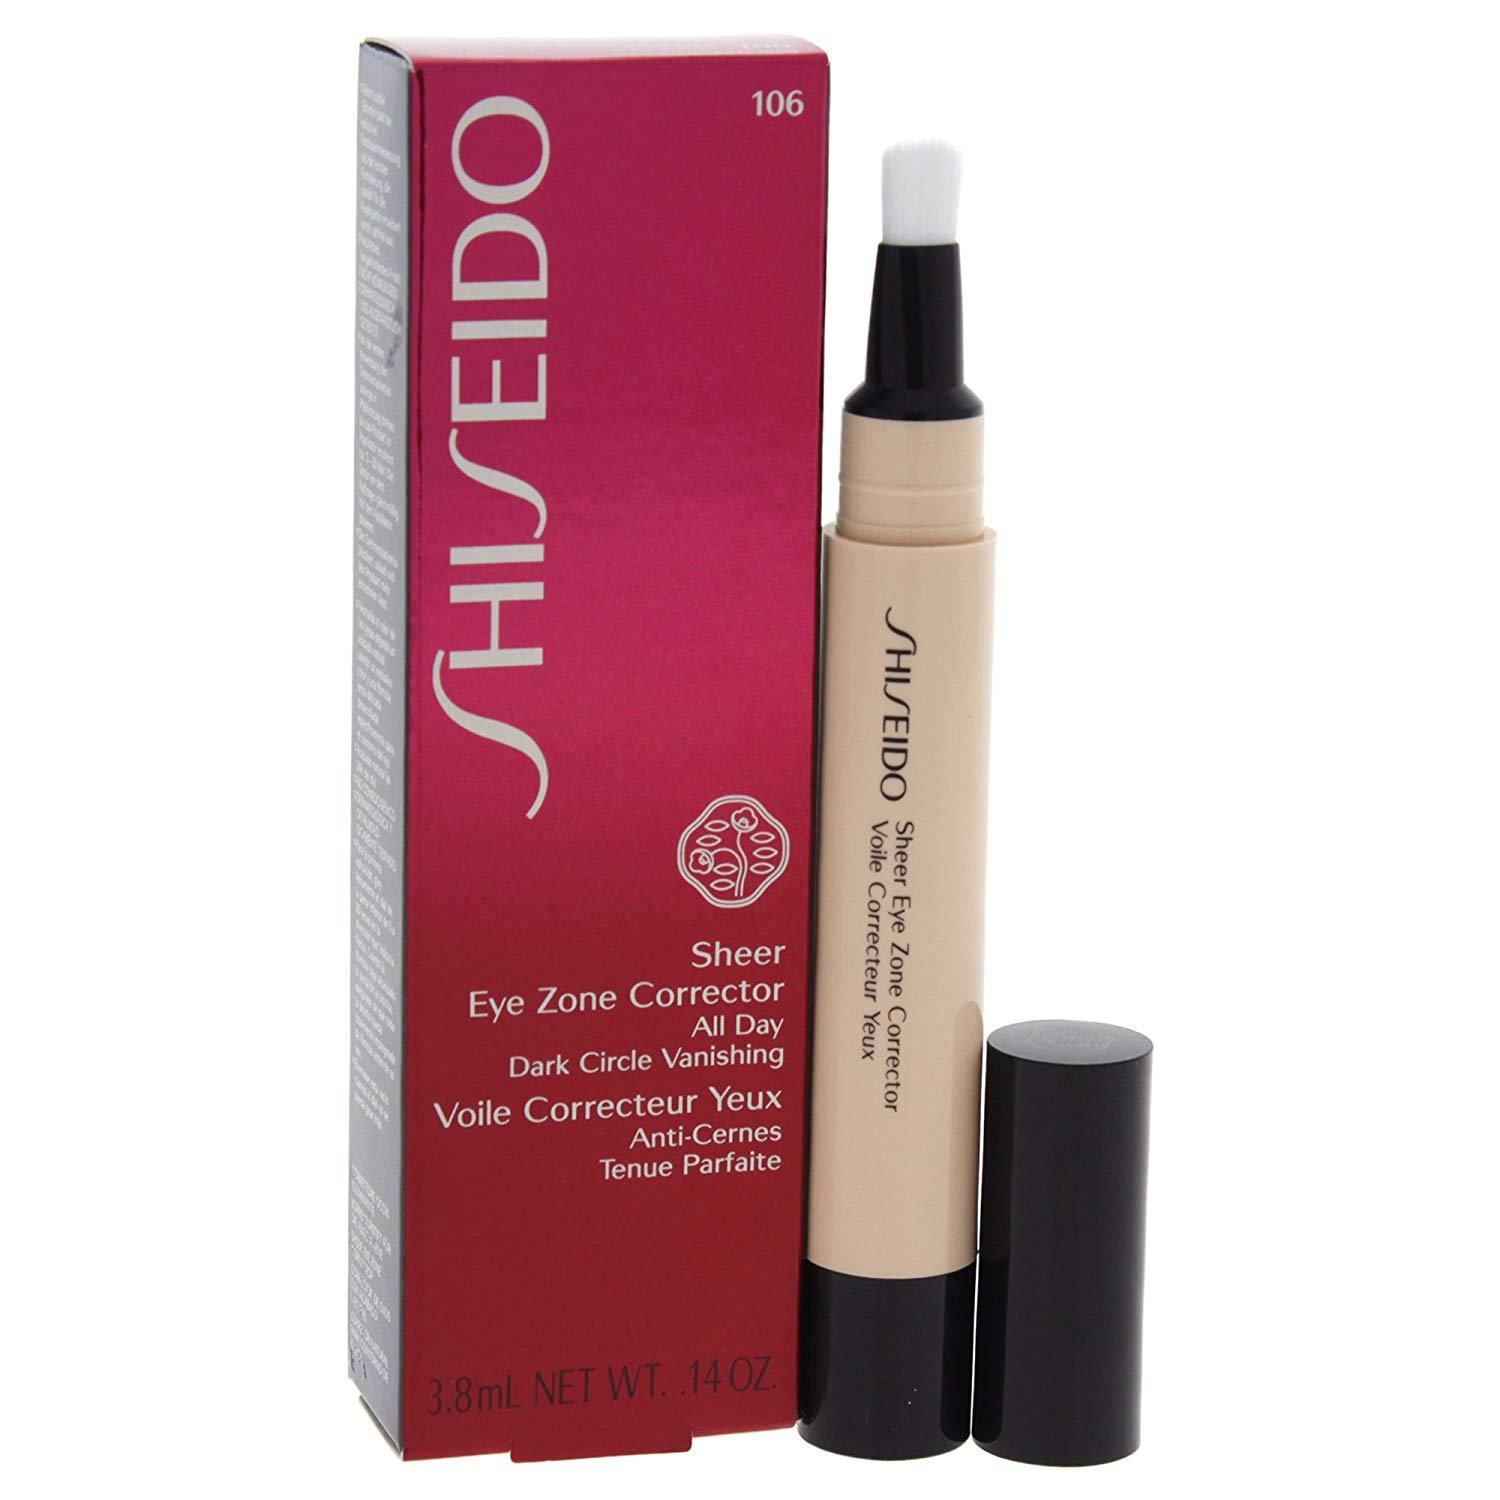 Shiseido Smk Sheer Eye Corrector 106 Pack of 1